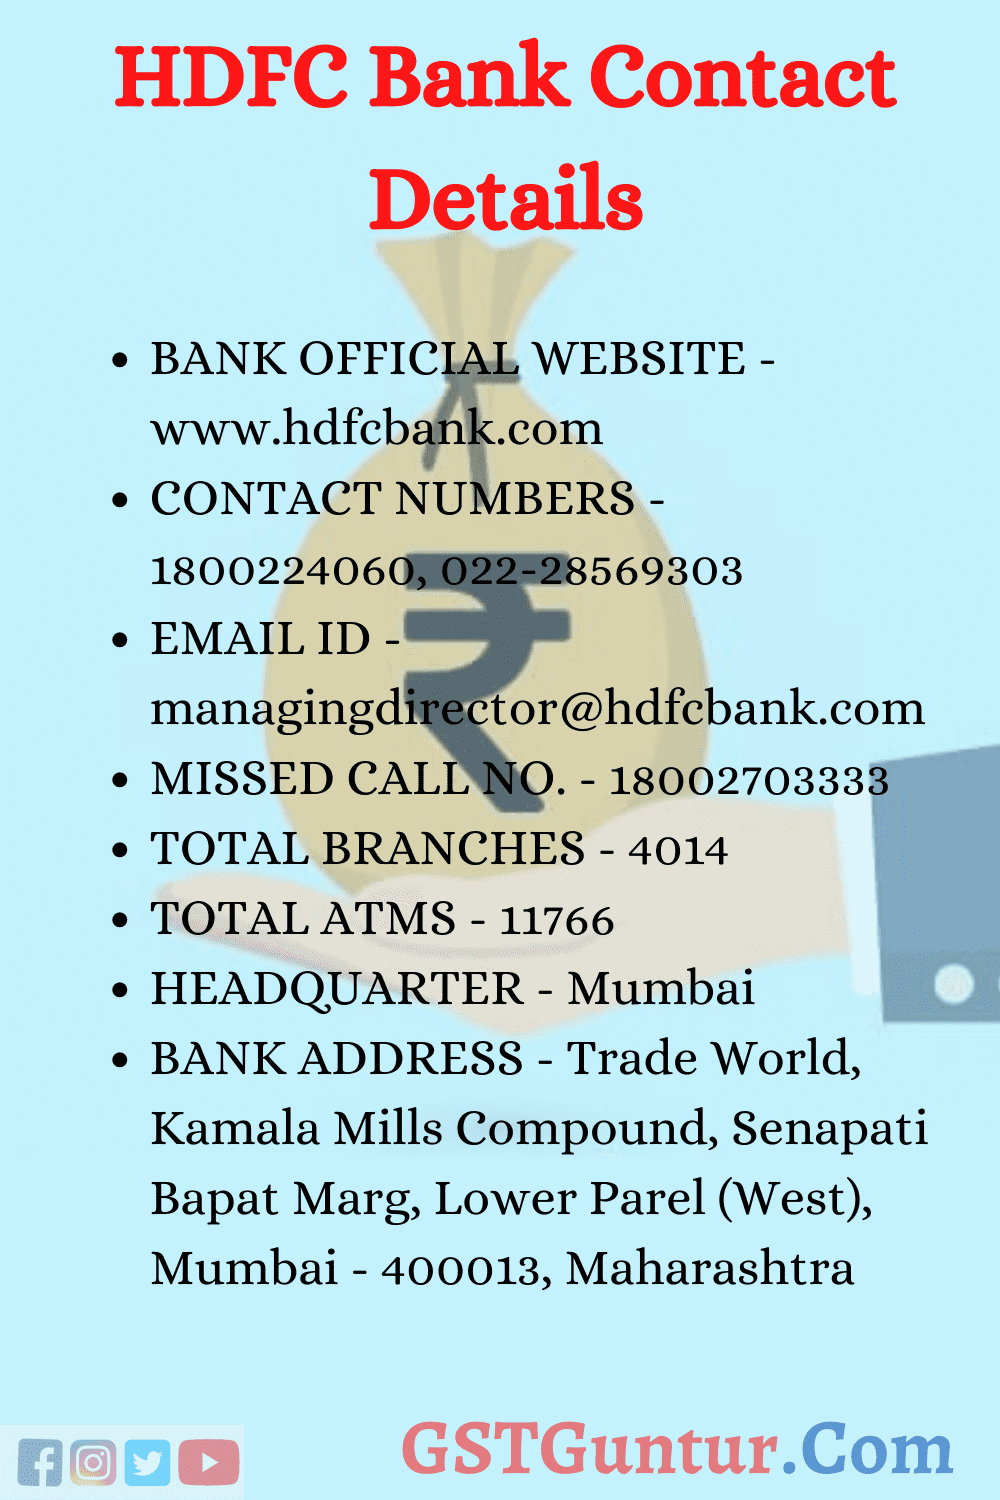 HDFC Bank Contact Details